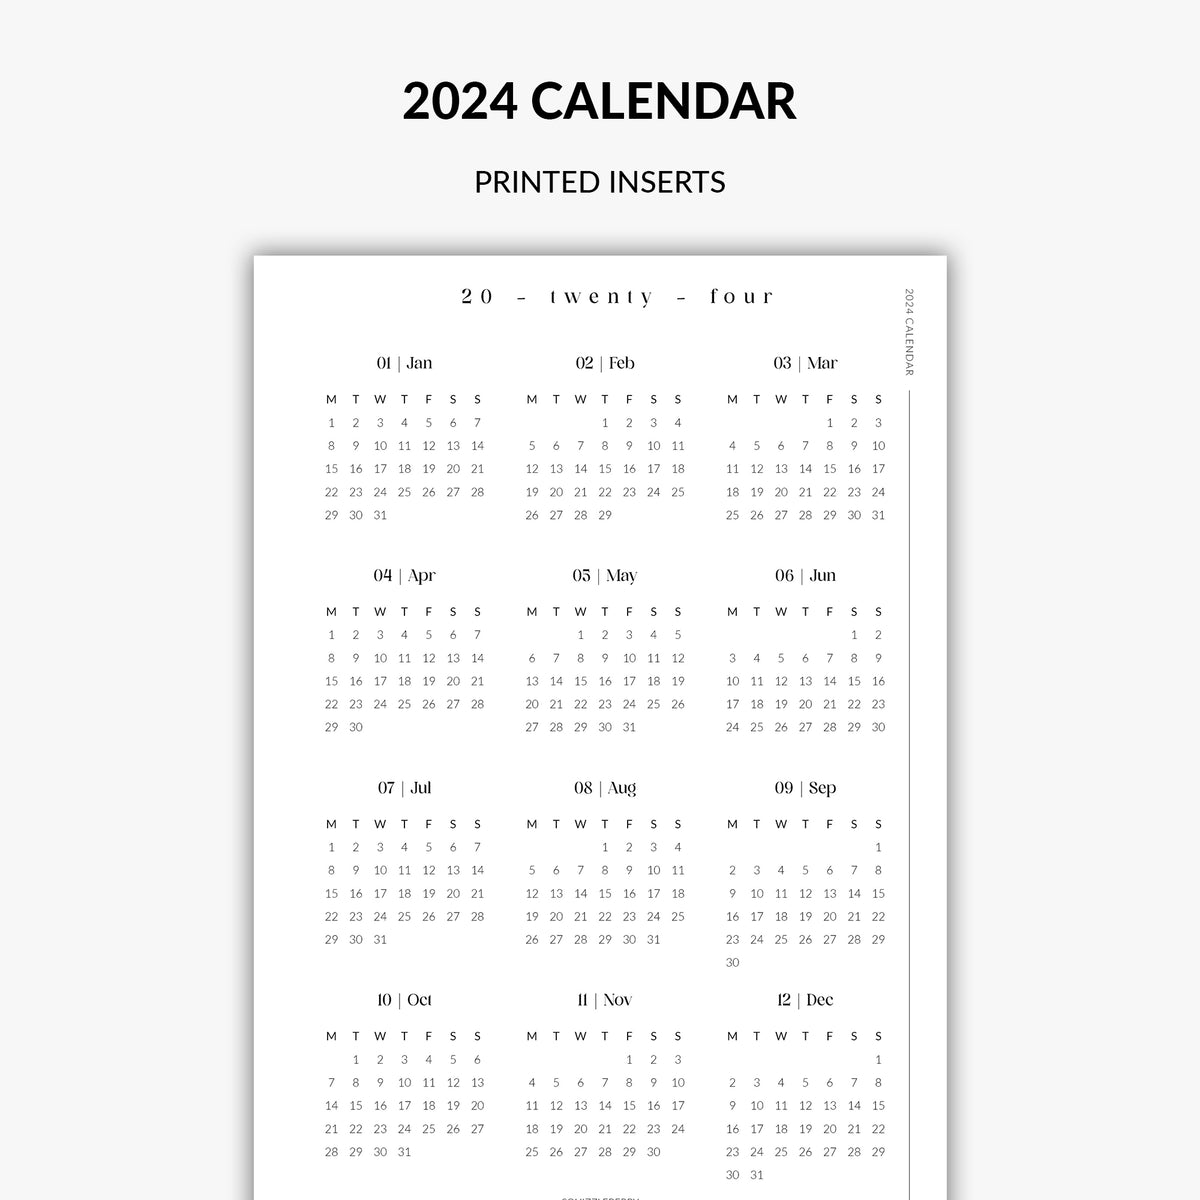 2024 calendar printed vellum insert